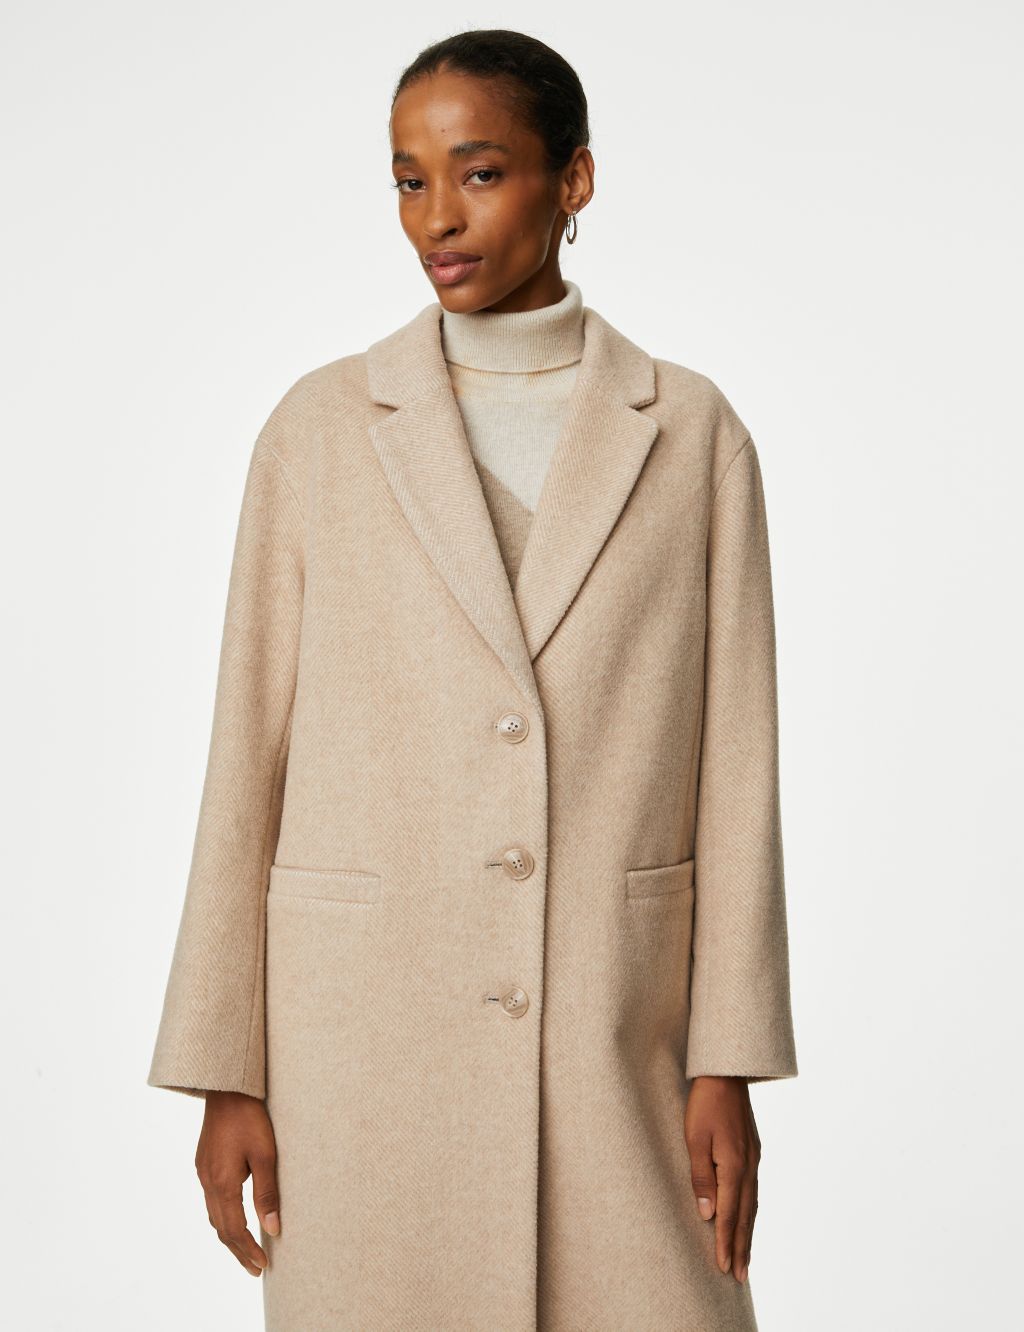 Wool Blend Herringbone Tailored Coat image 3